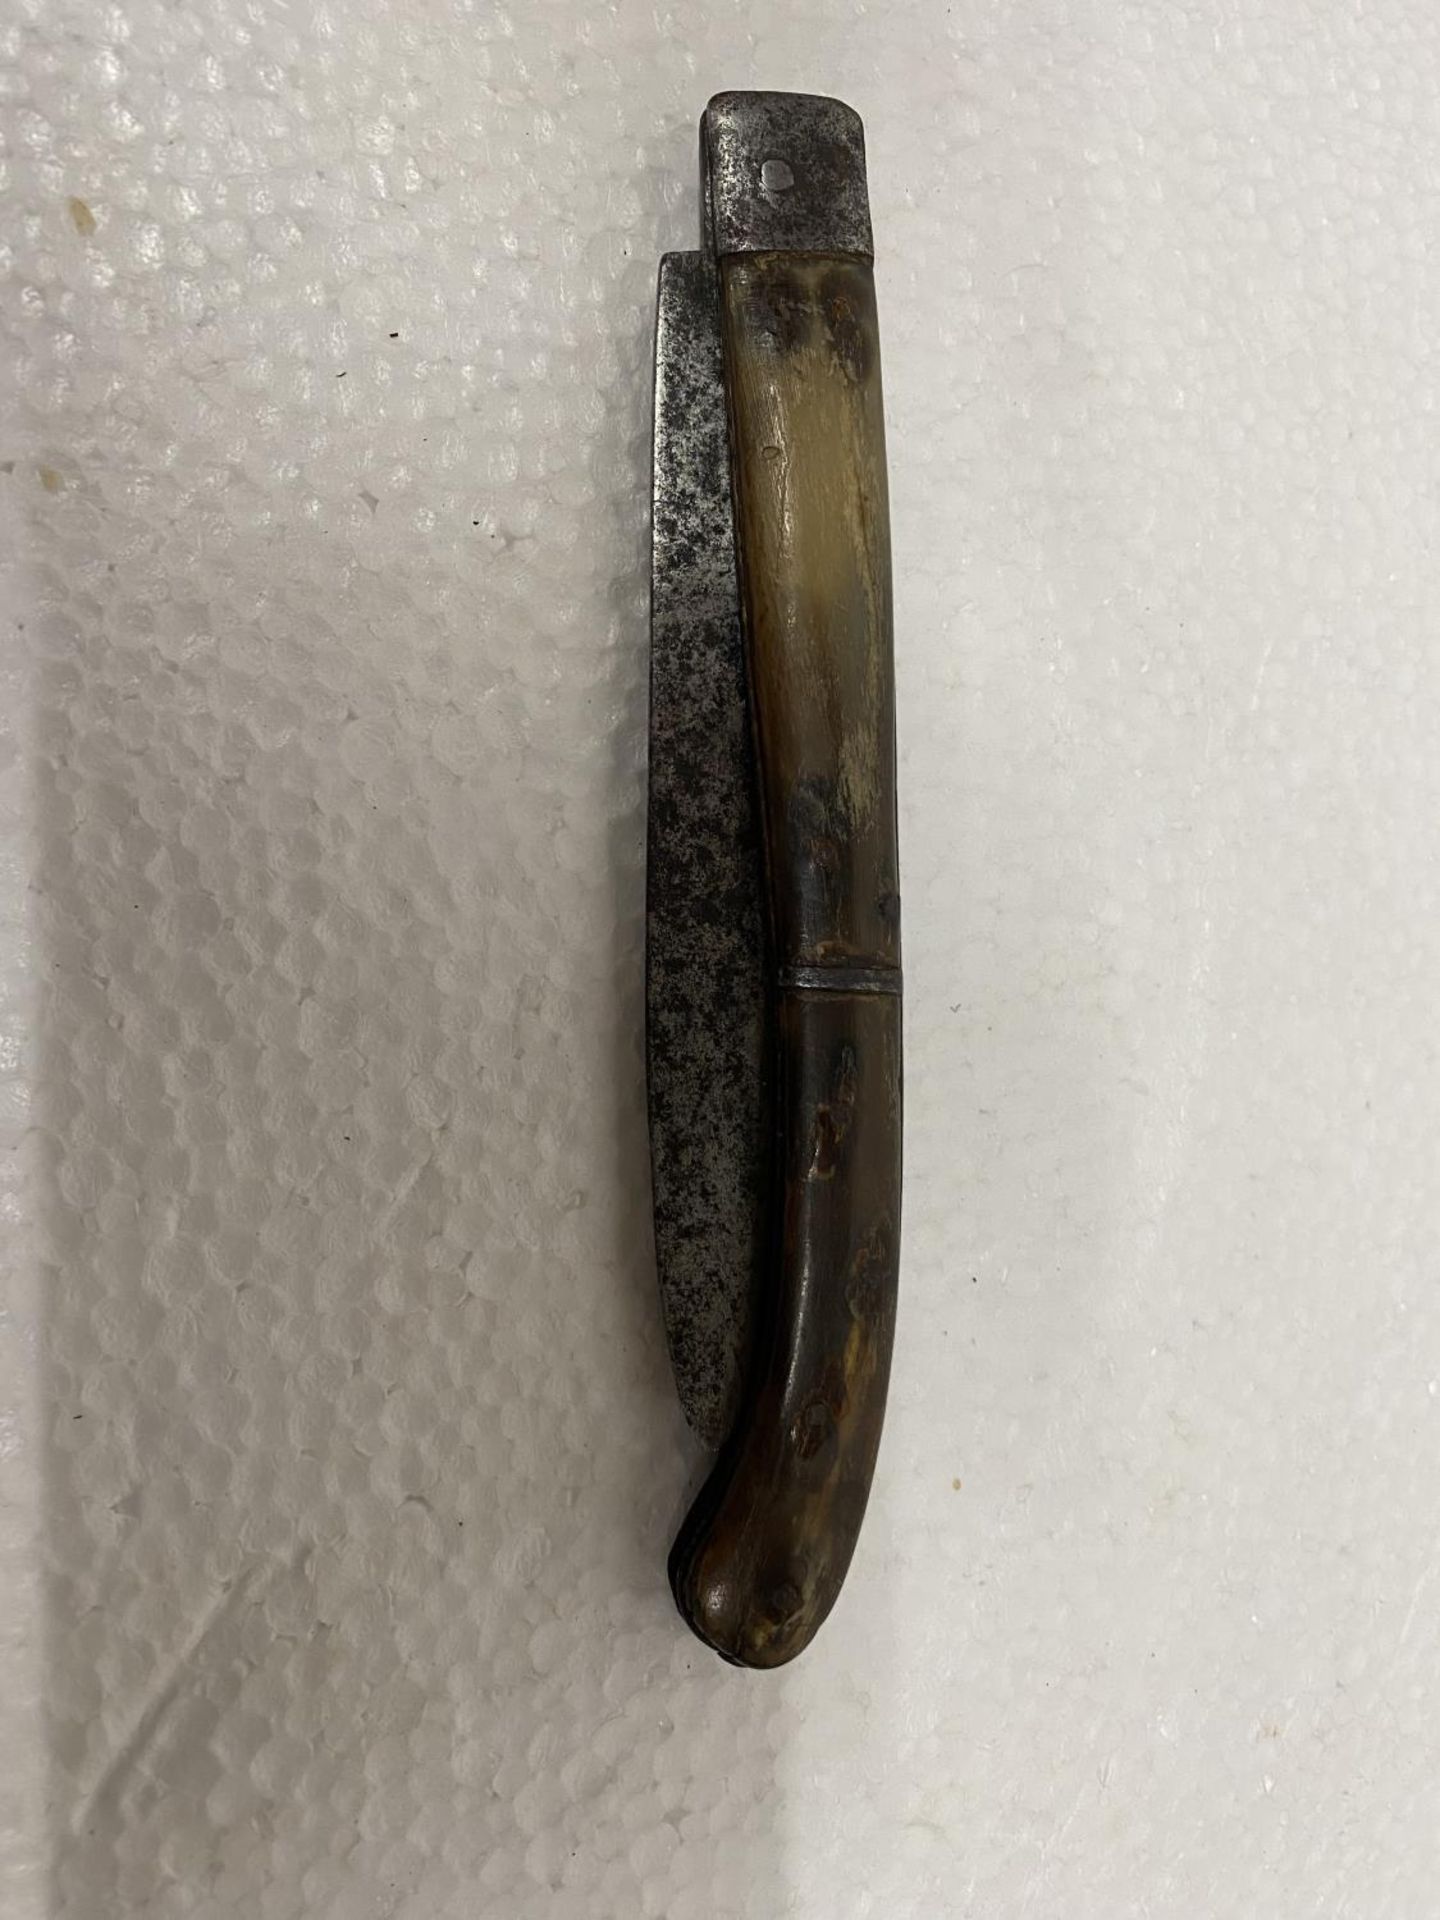 A VINTAGE FOLDING KNIFE WITH HORN GRIP, 14CM BLADE